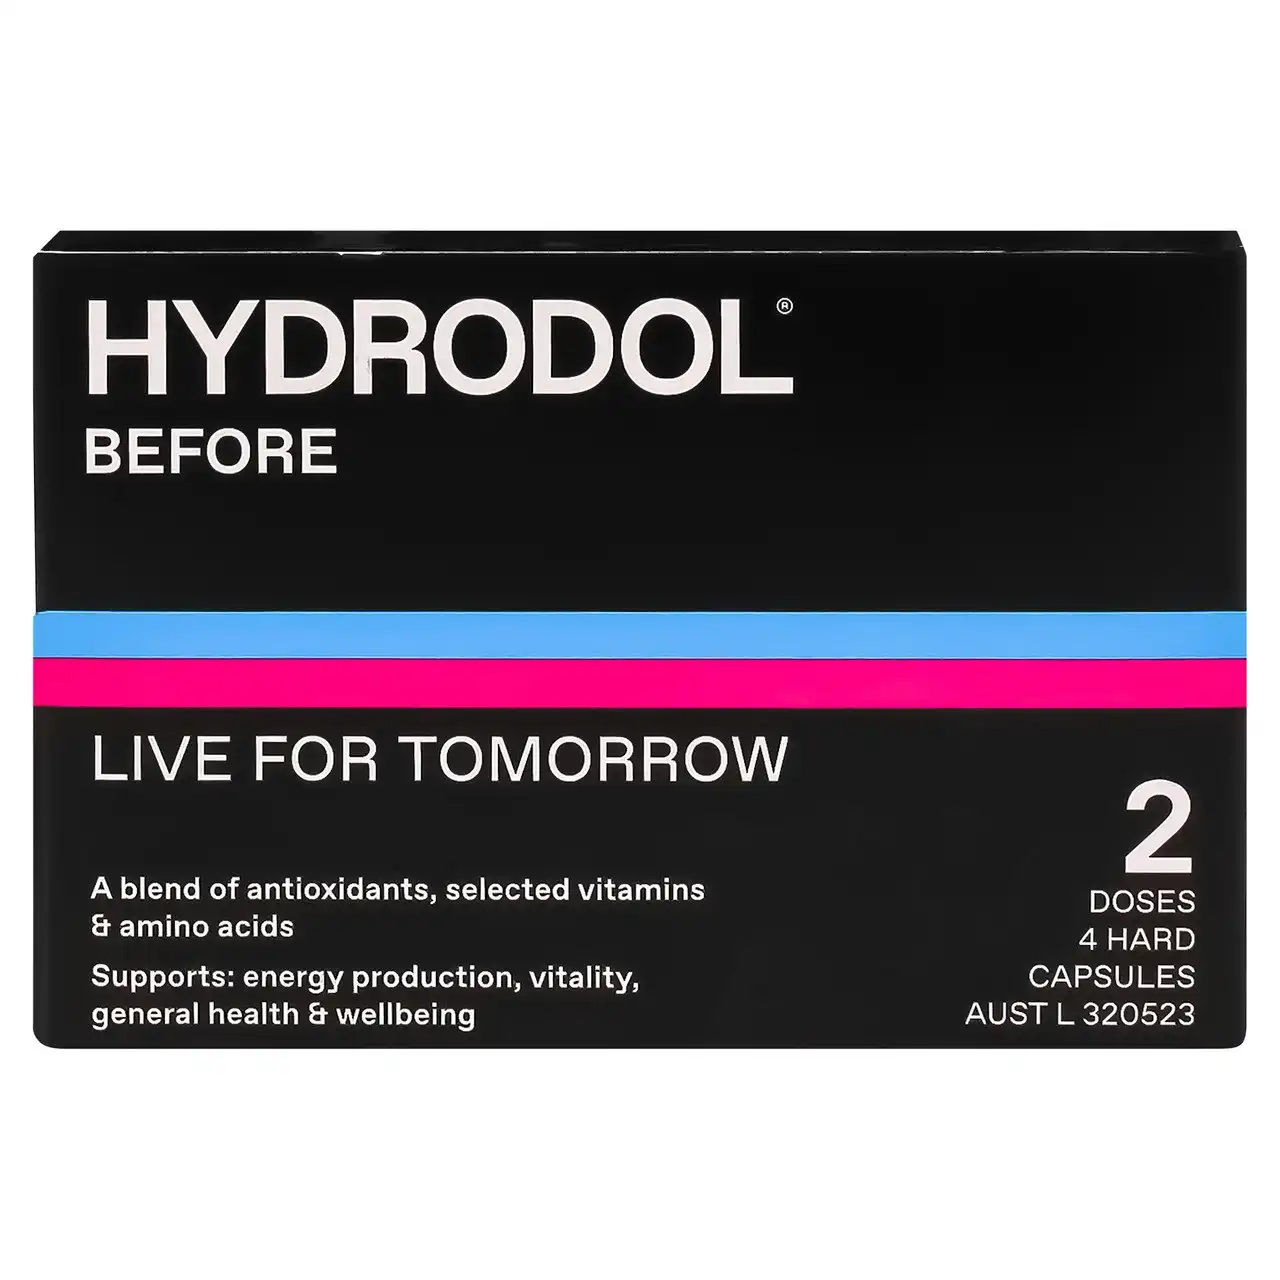 Hydrodol Before 2 Dose 4 capsules